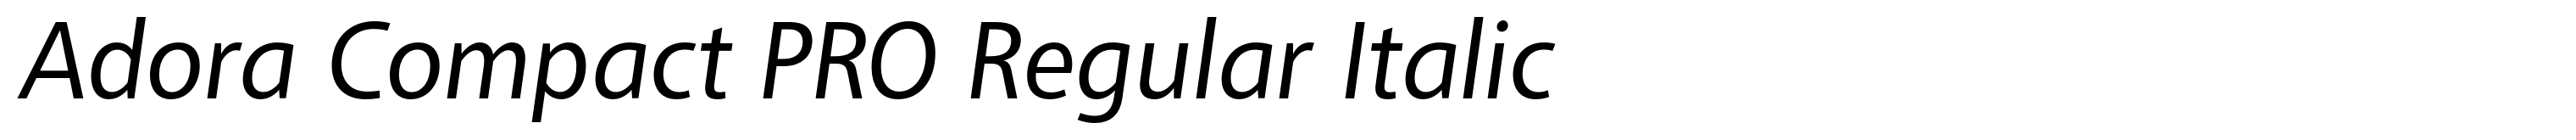 Adora Compact PRO Regular Italic